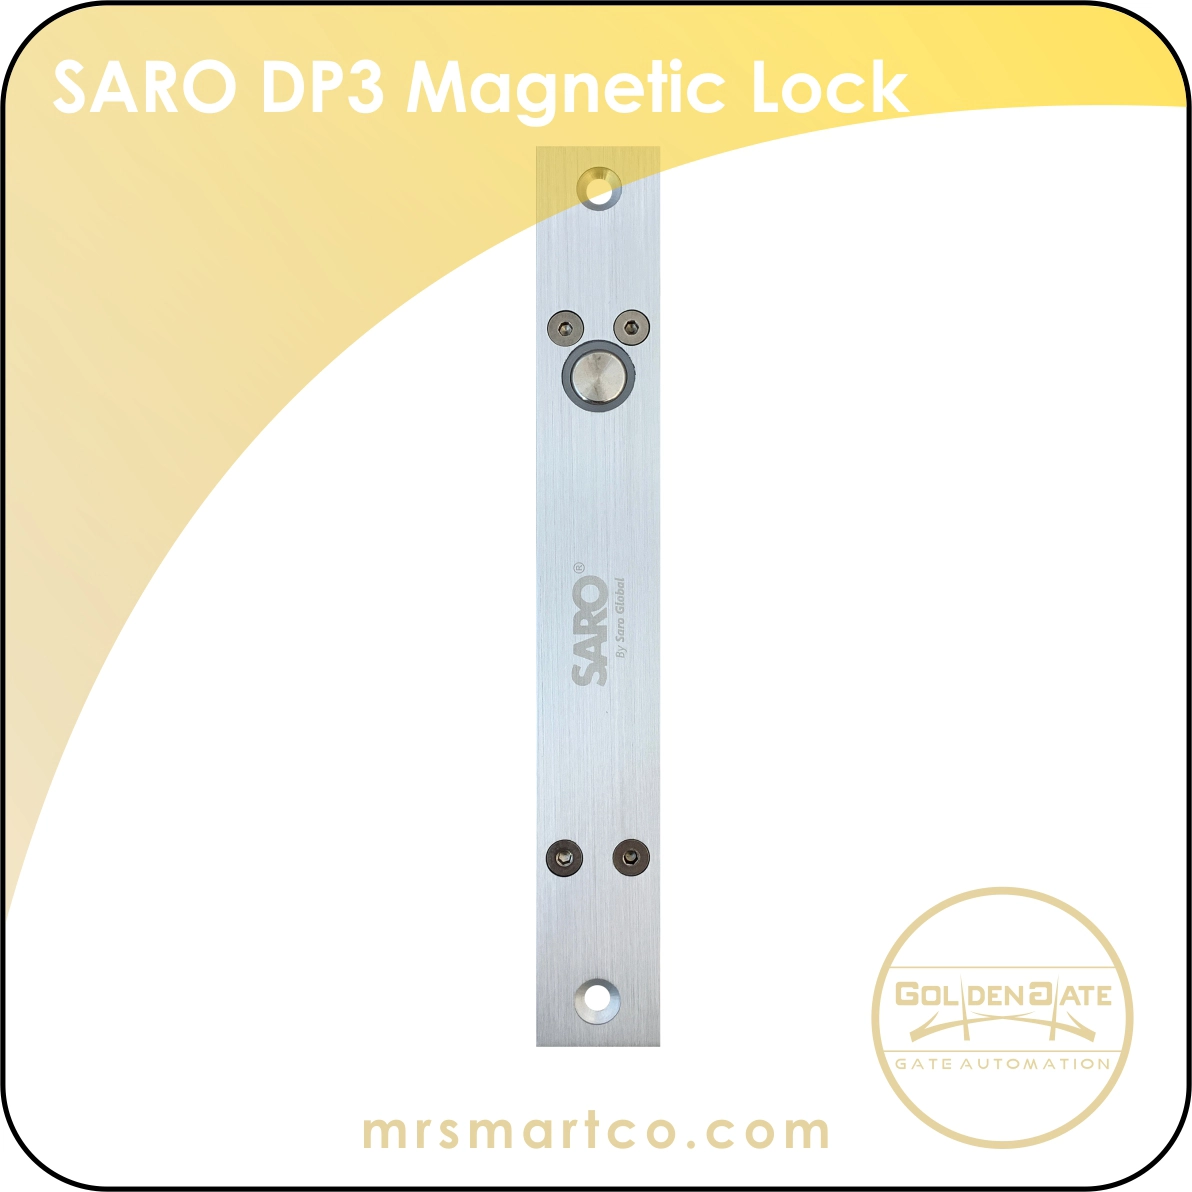 Saro DP3 Magnetic Lock